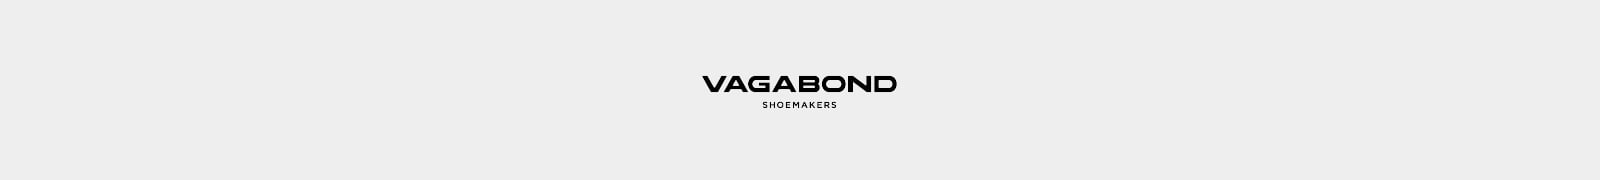 Vagabond Shoemakers header image